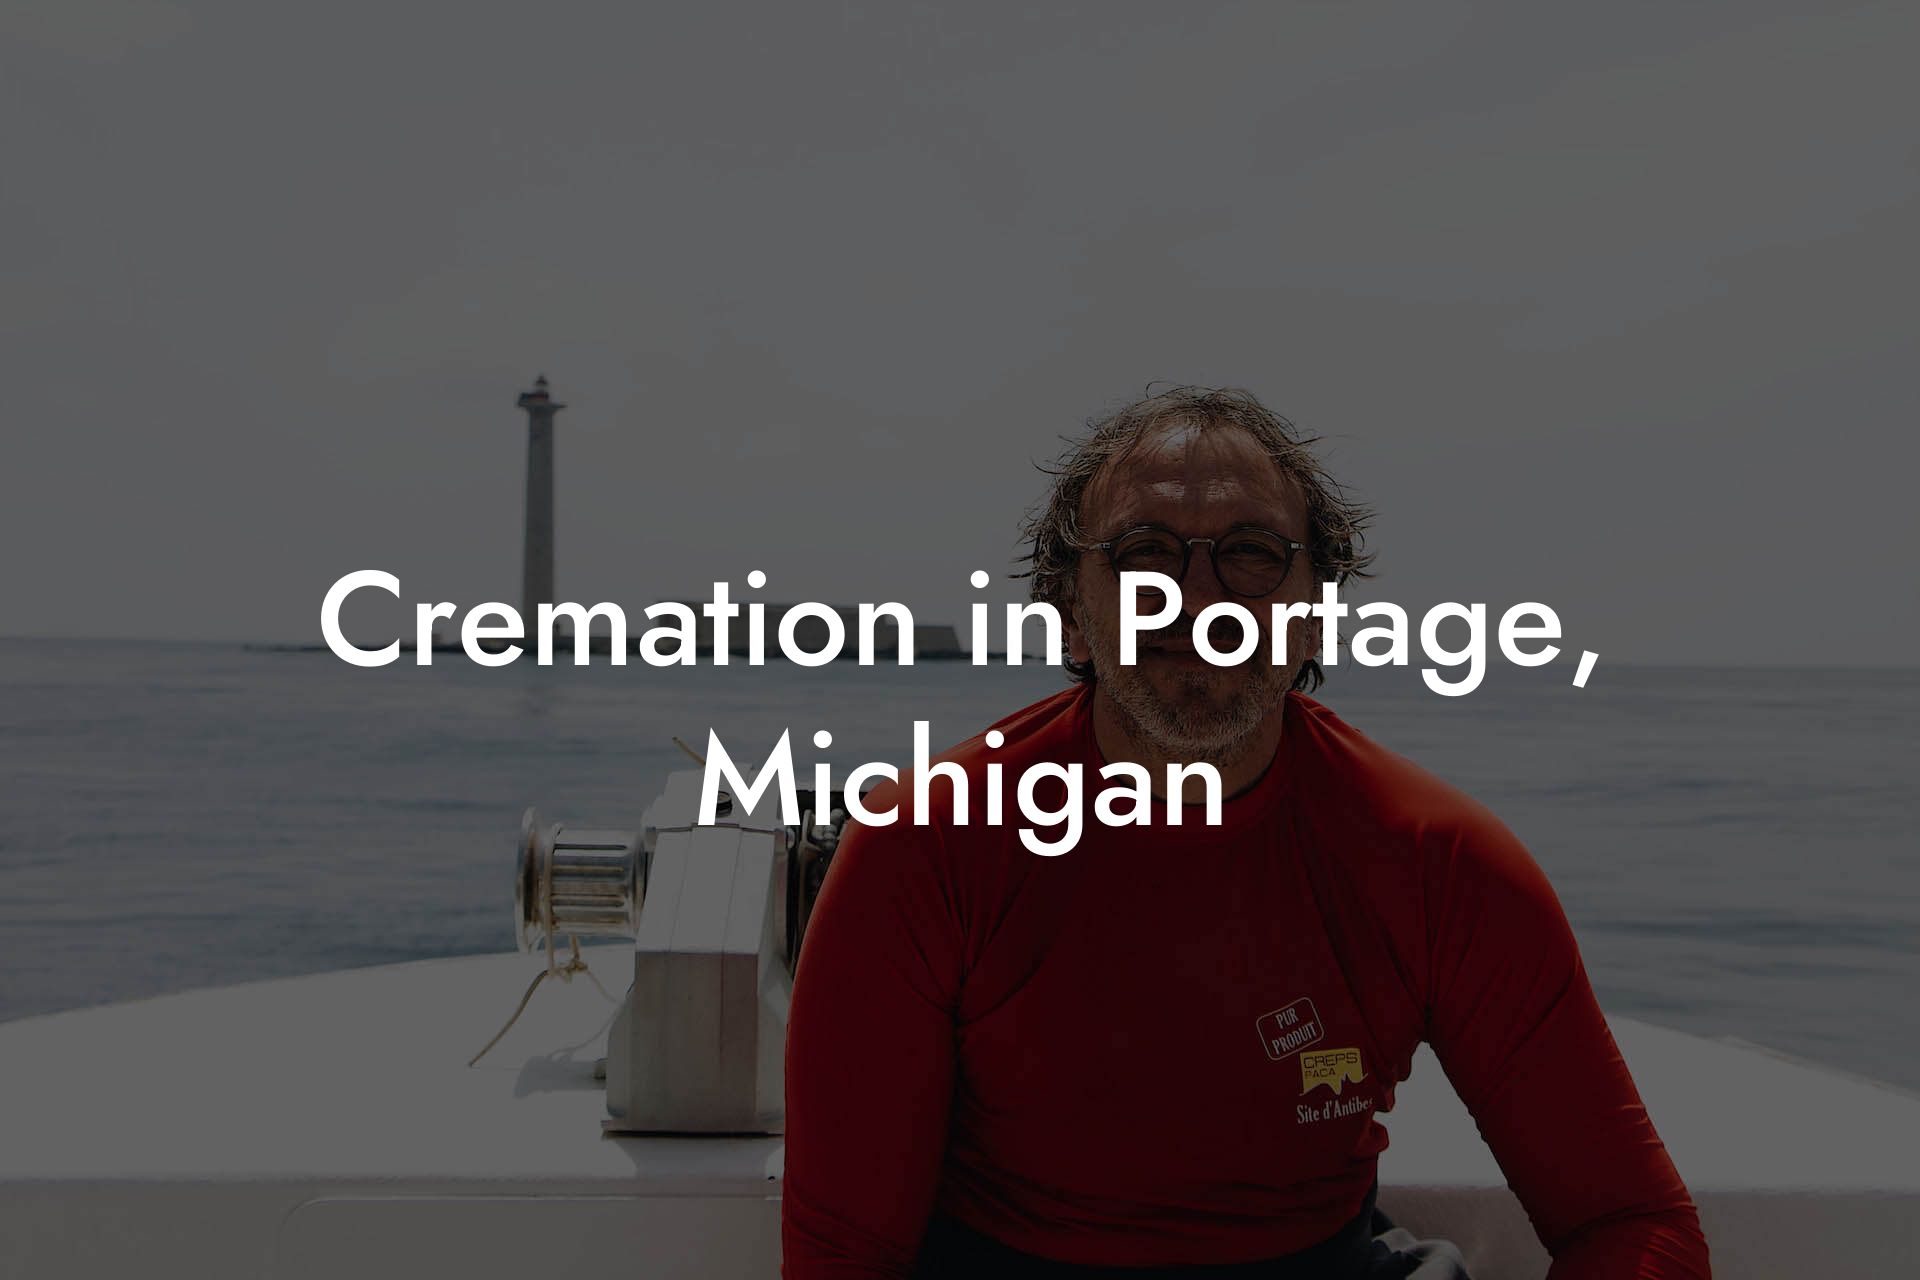 Cremation in Portage, Michigan